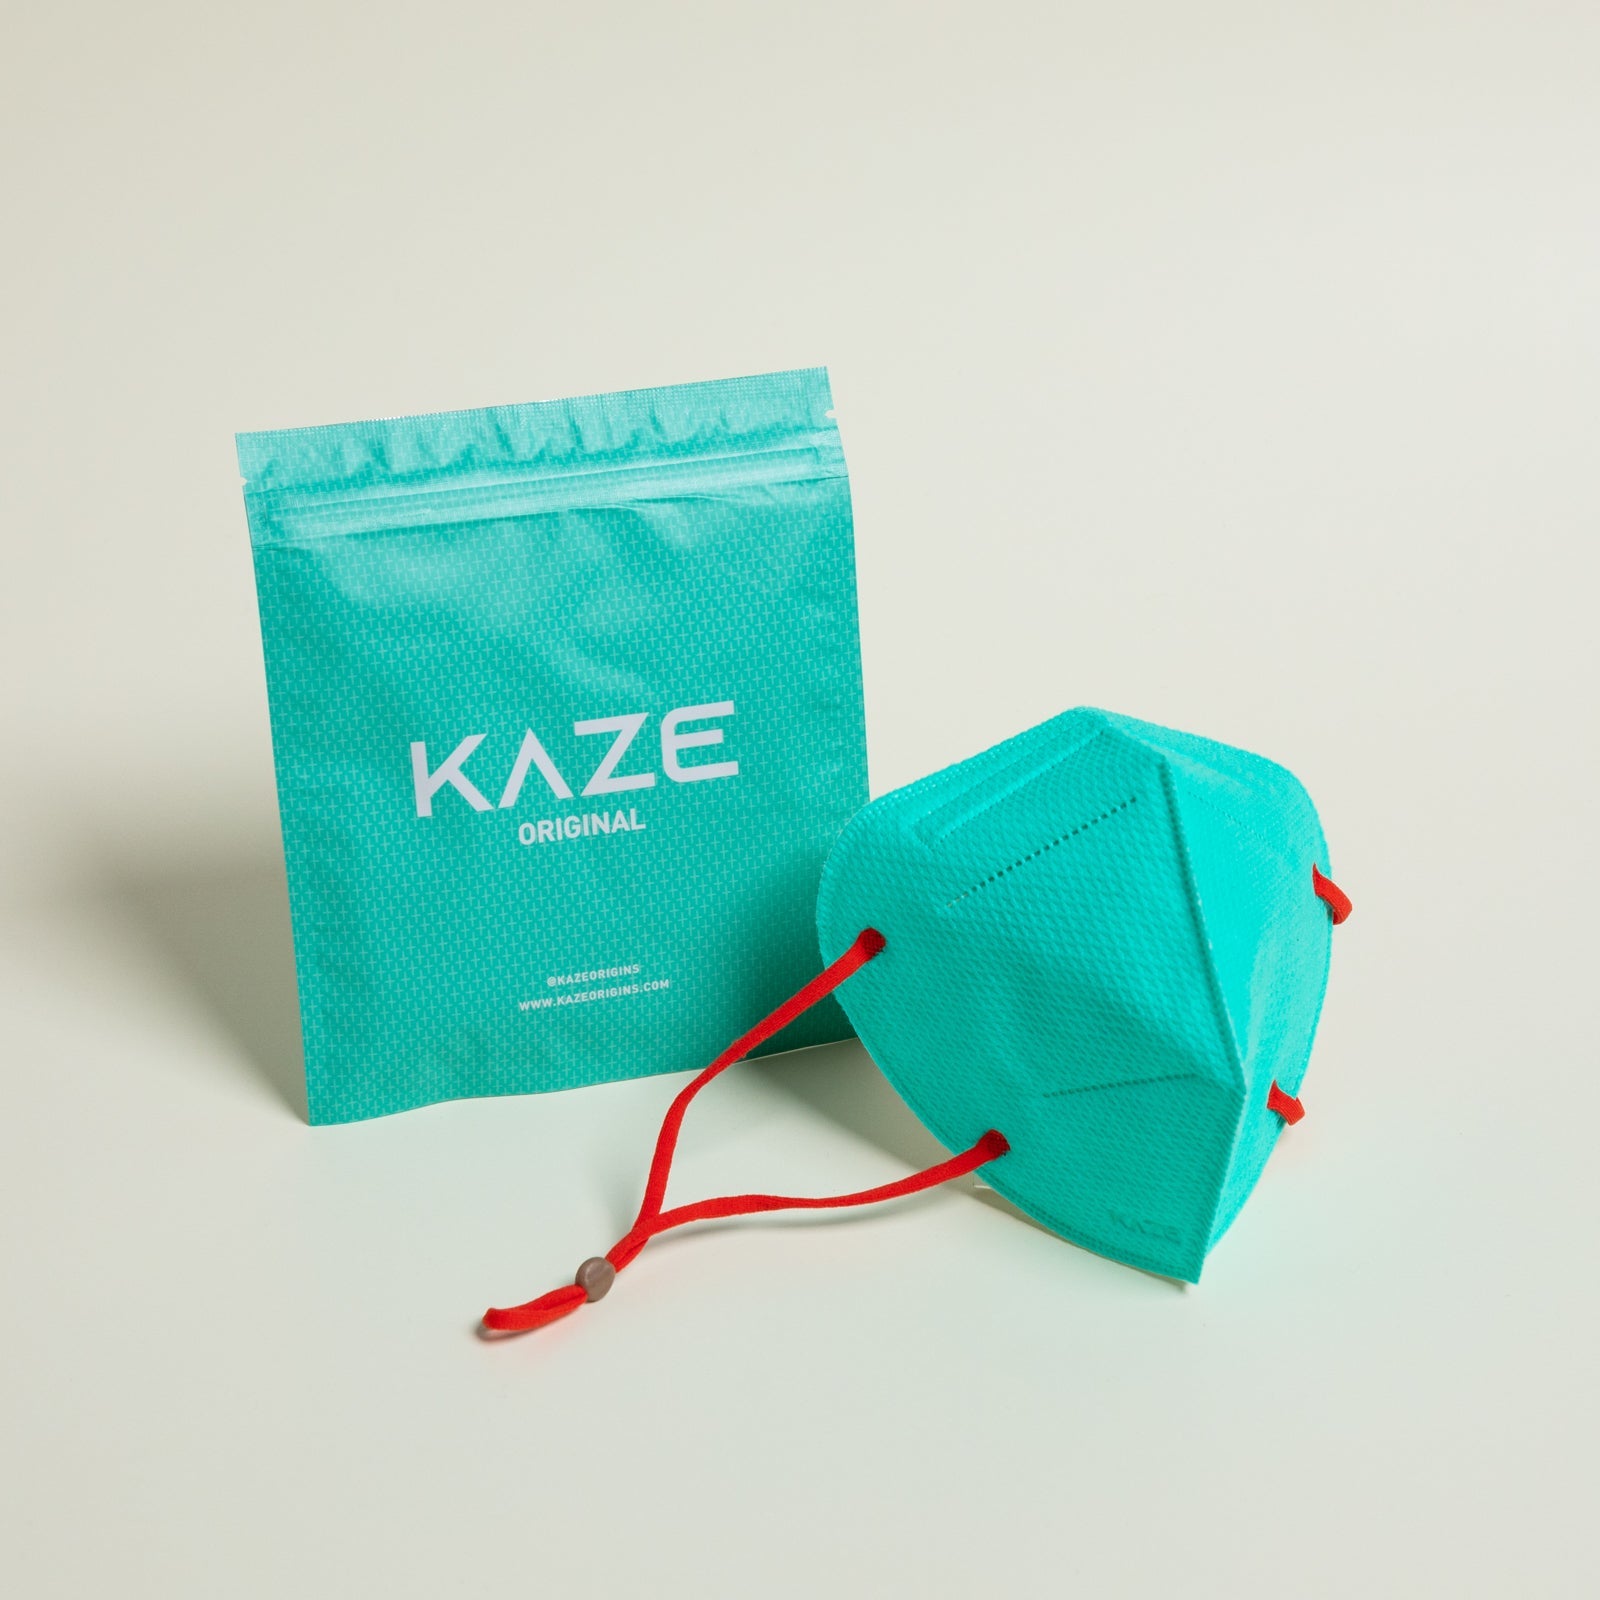 KAZE Masks- Sour Candy Series